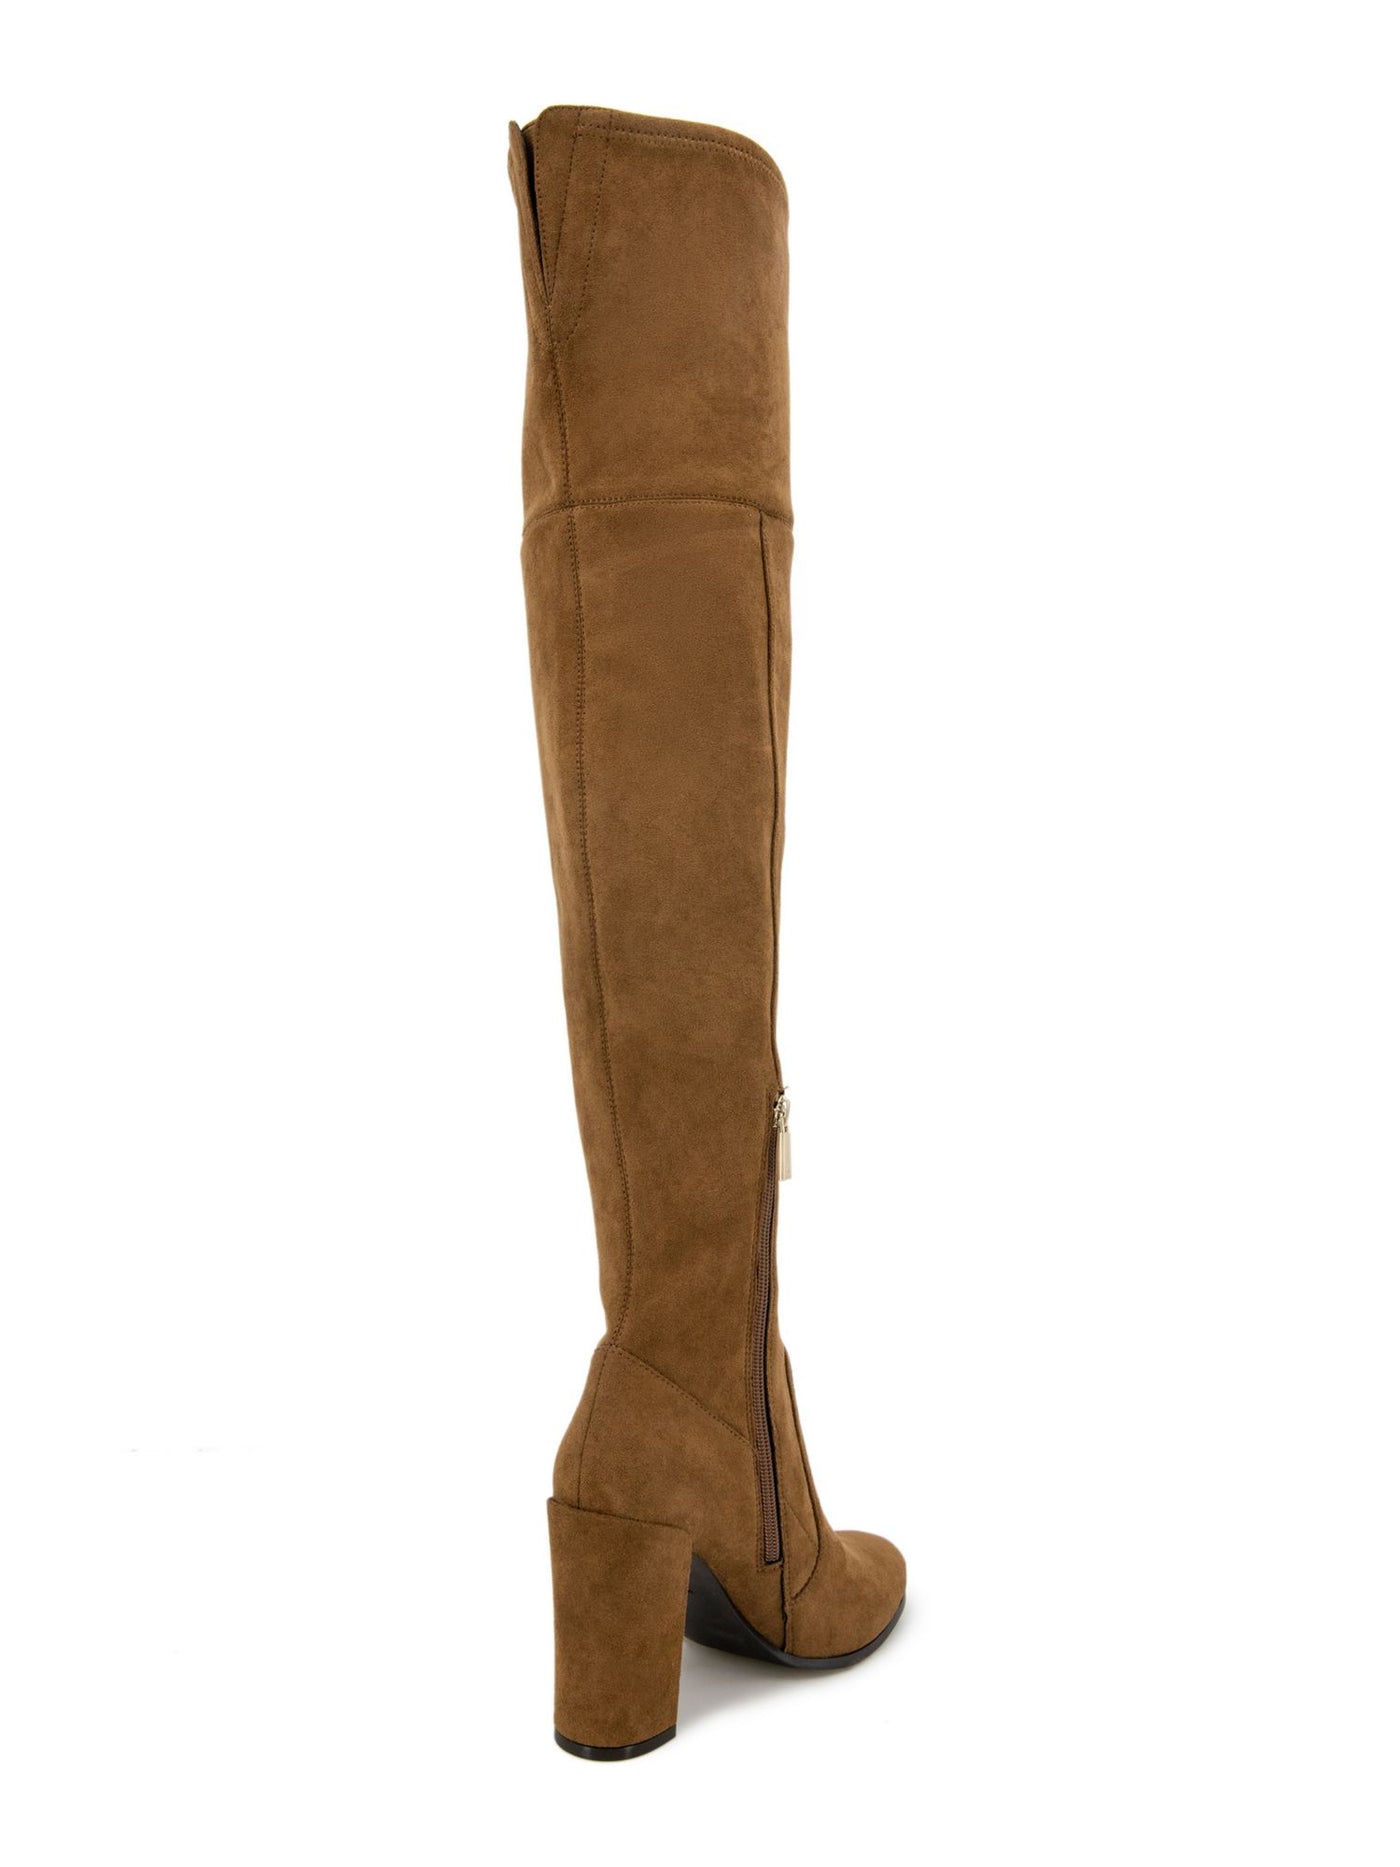 KENNETH COLE NEW YORK Womens Brown Inside Half Zip Justin Round Toe Block Heel Dress Boots 9 M